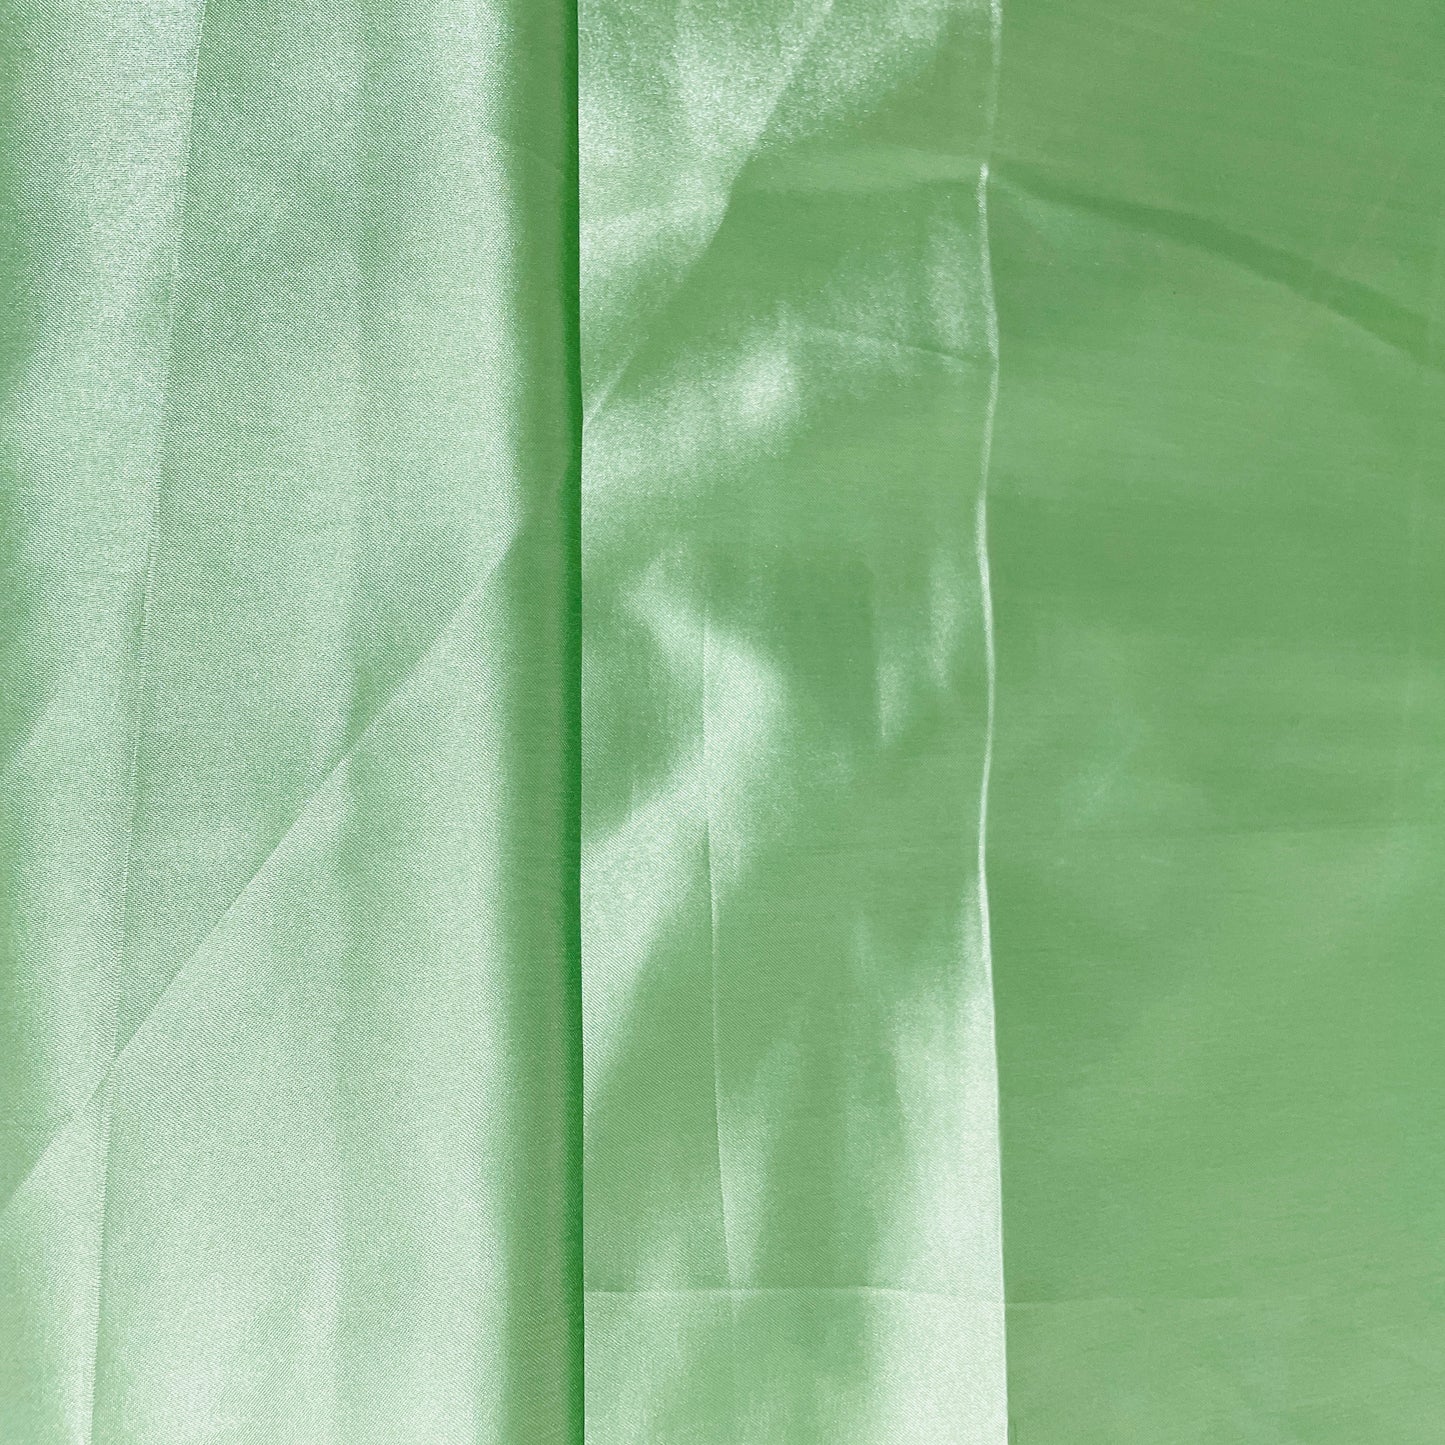 Parrot Green Solid Satin Fabric - TradeUNO